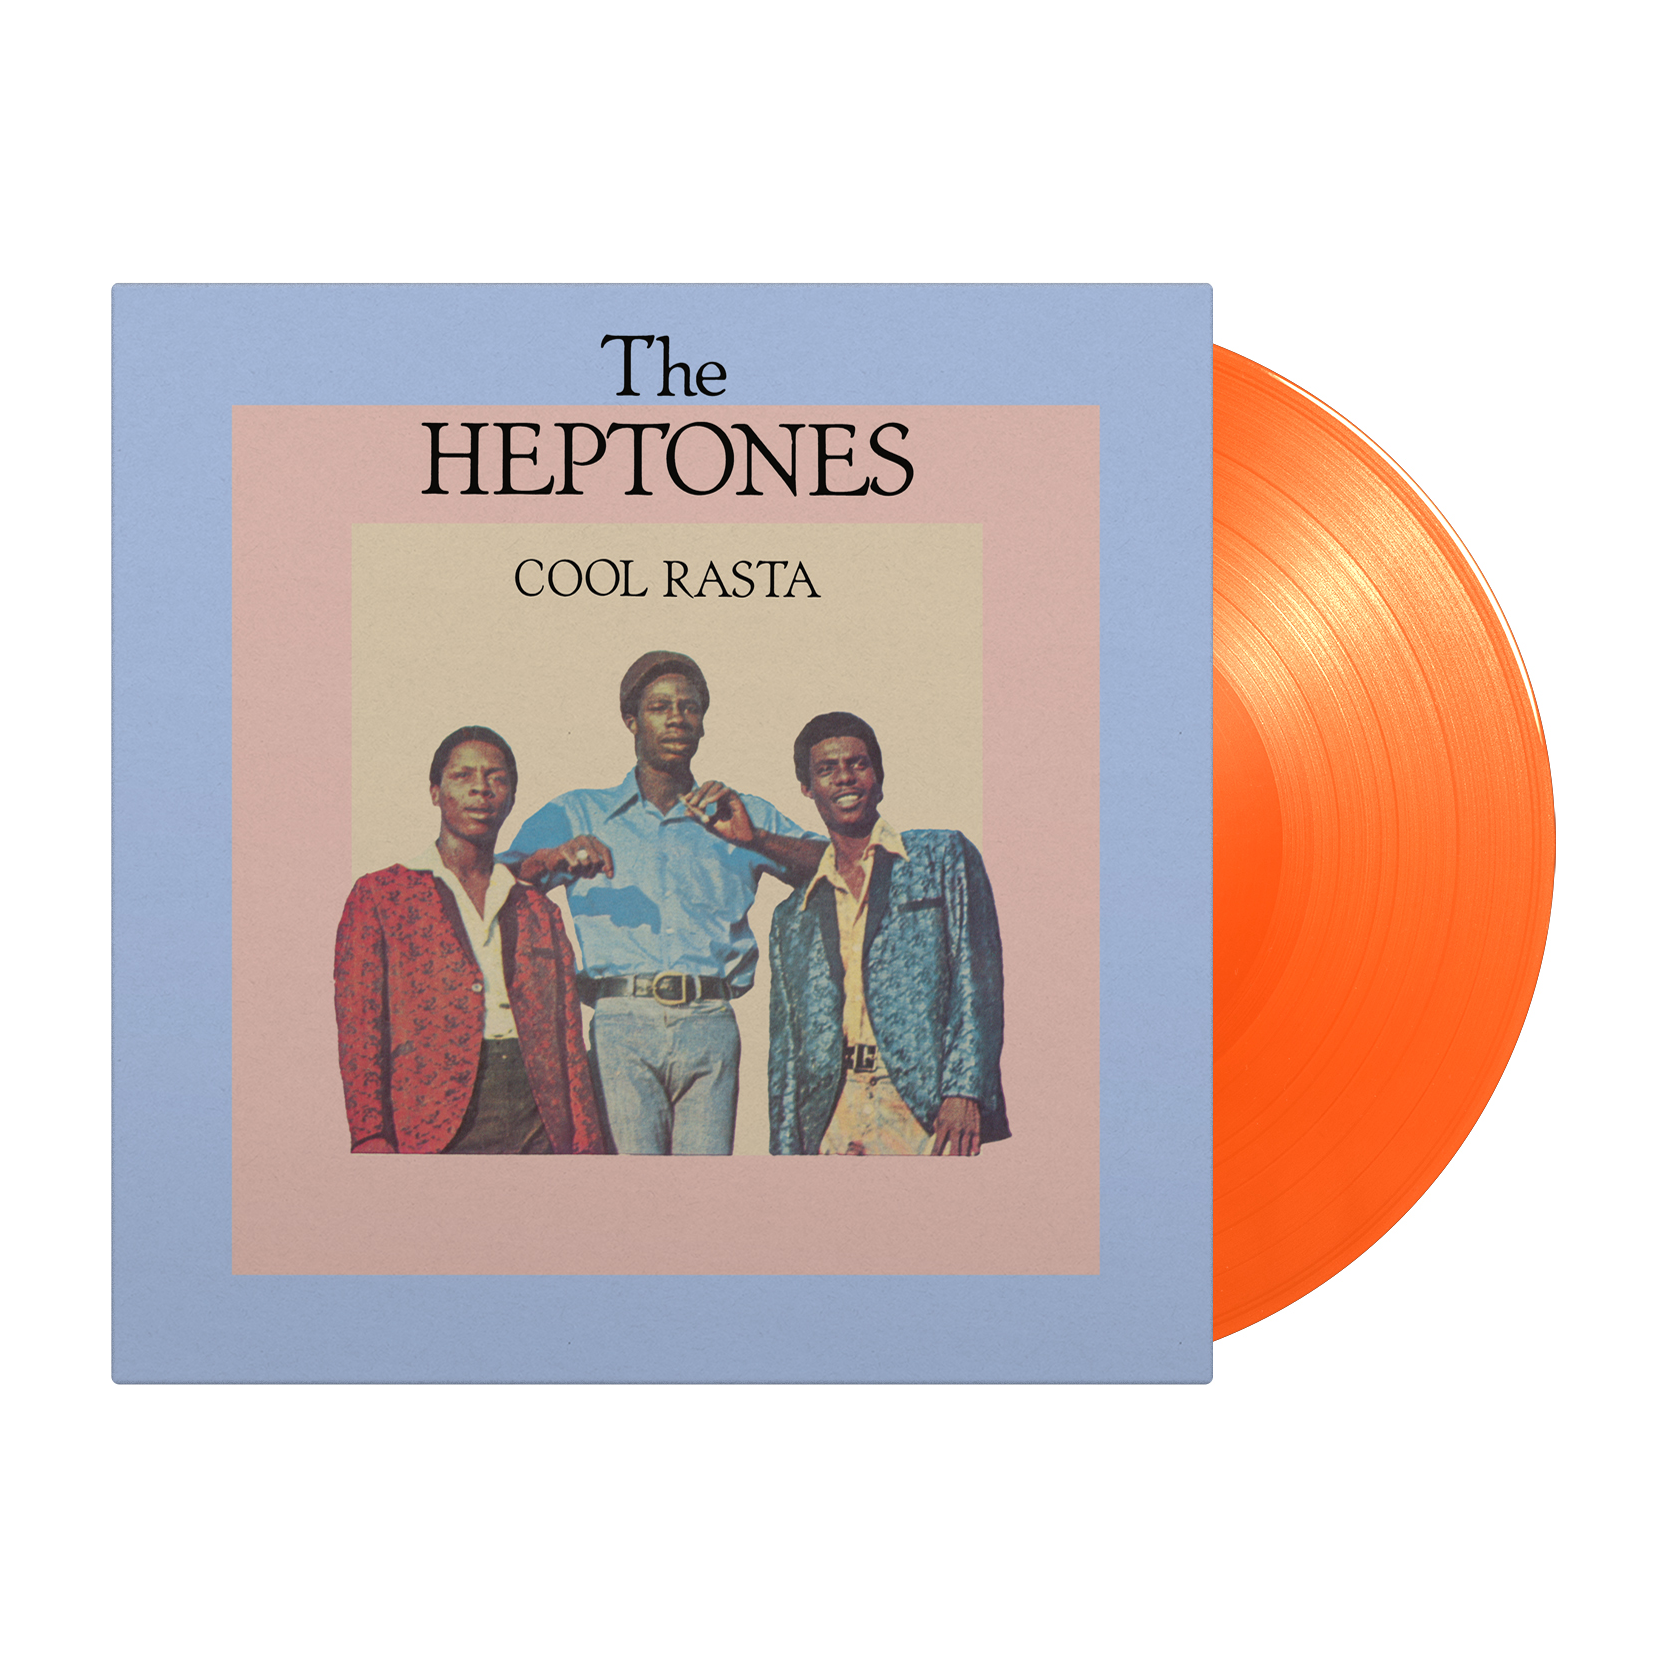 The Heptones - Cool Rasta: Limited Orange Vinyl LP.